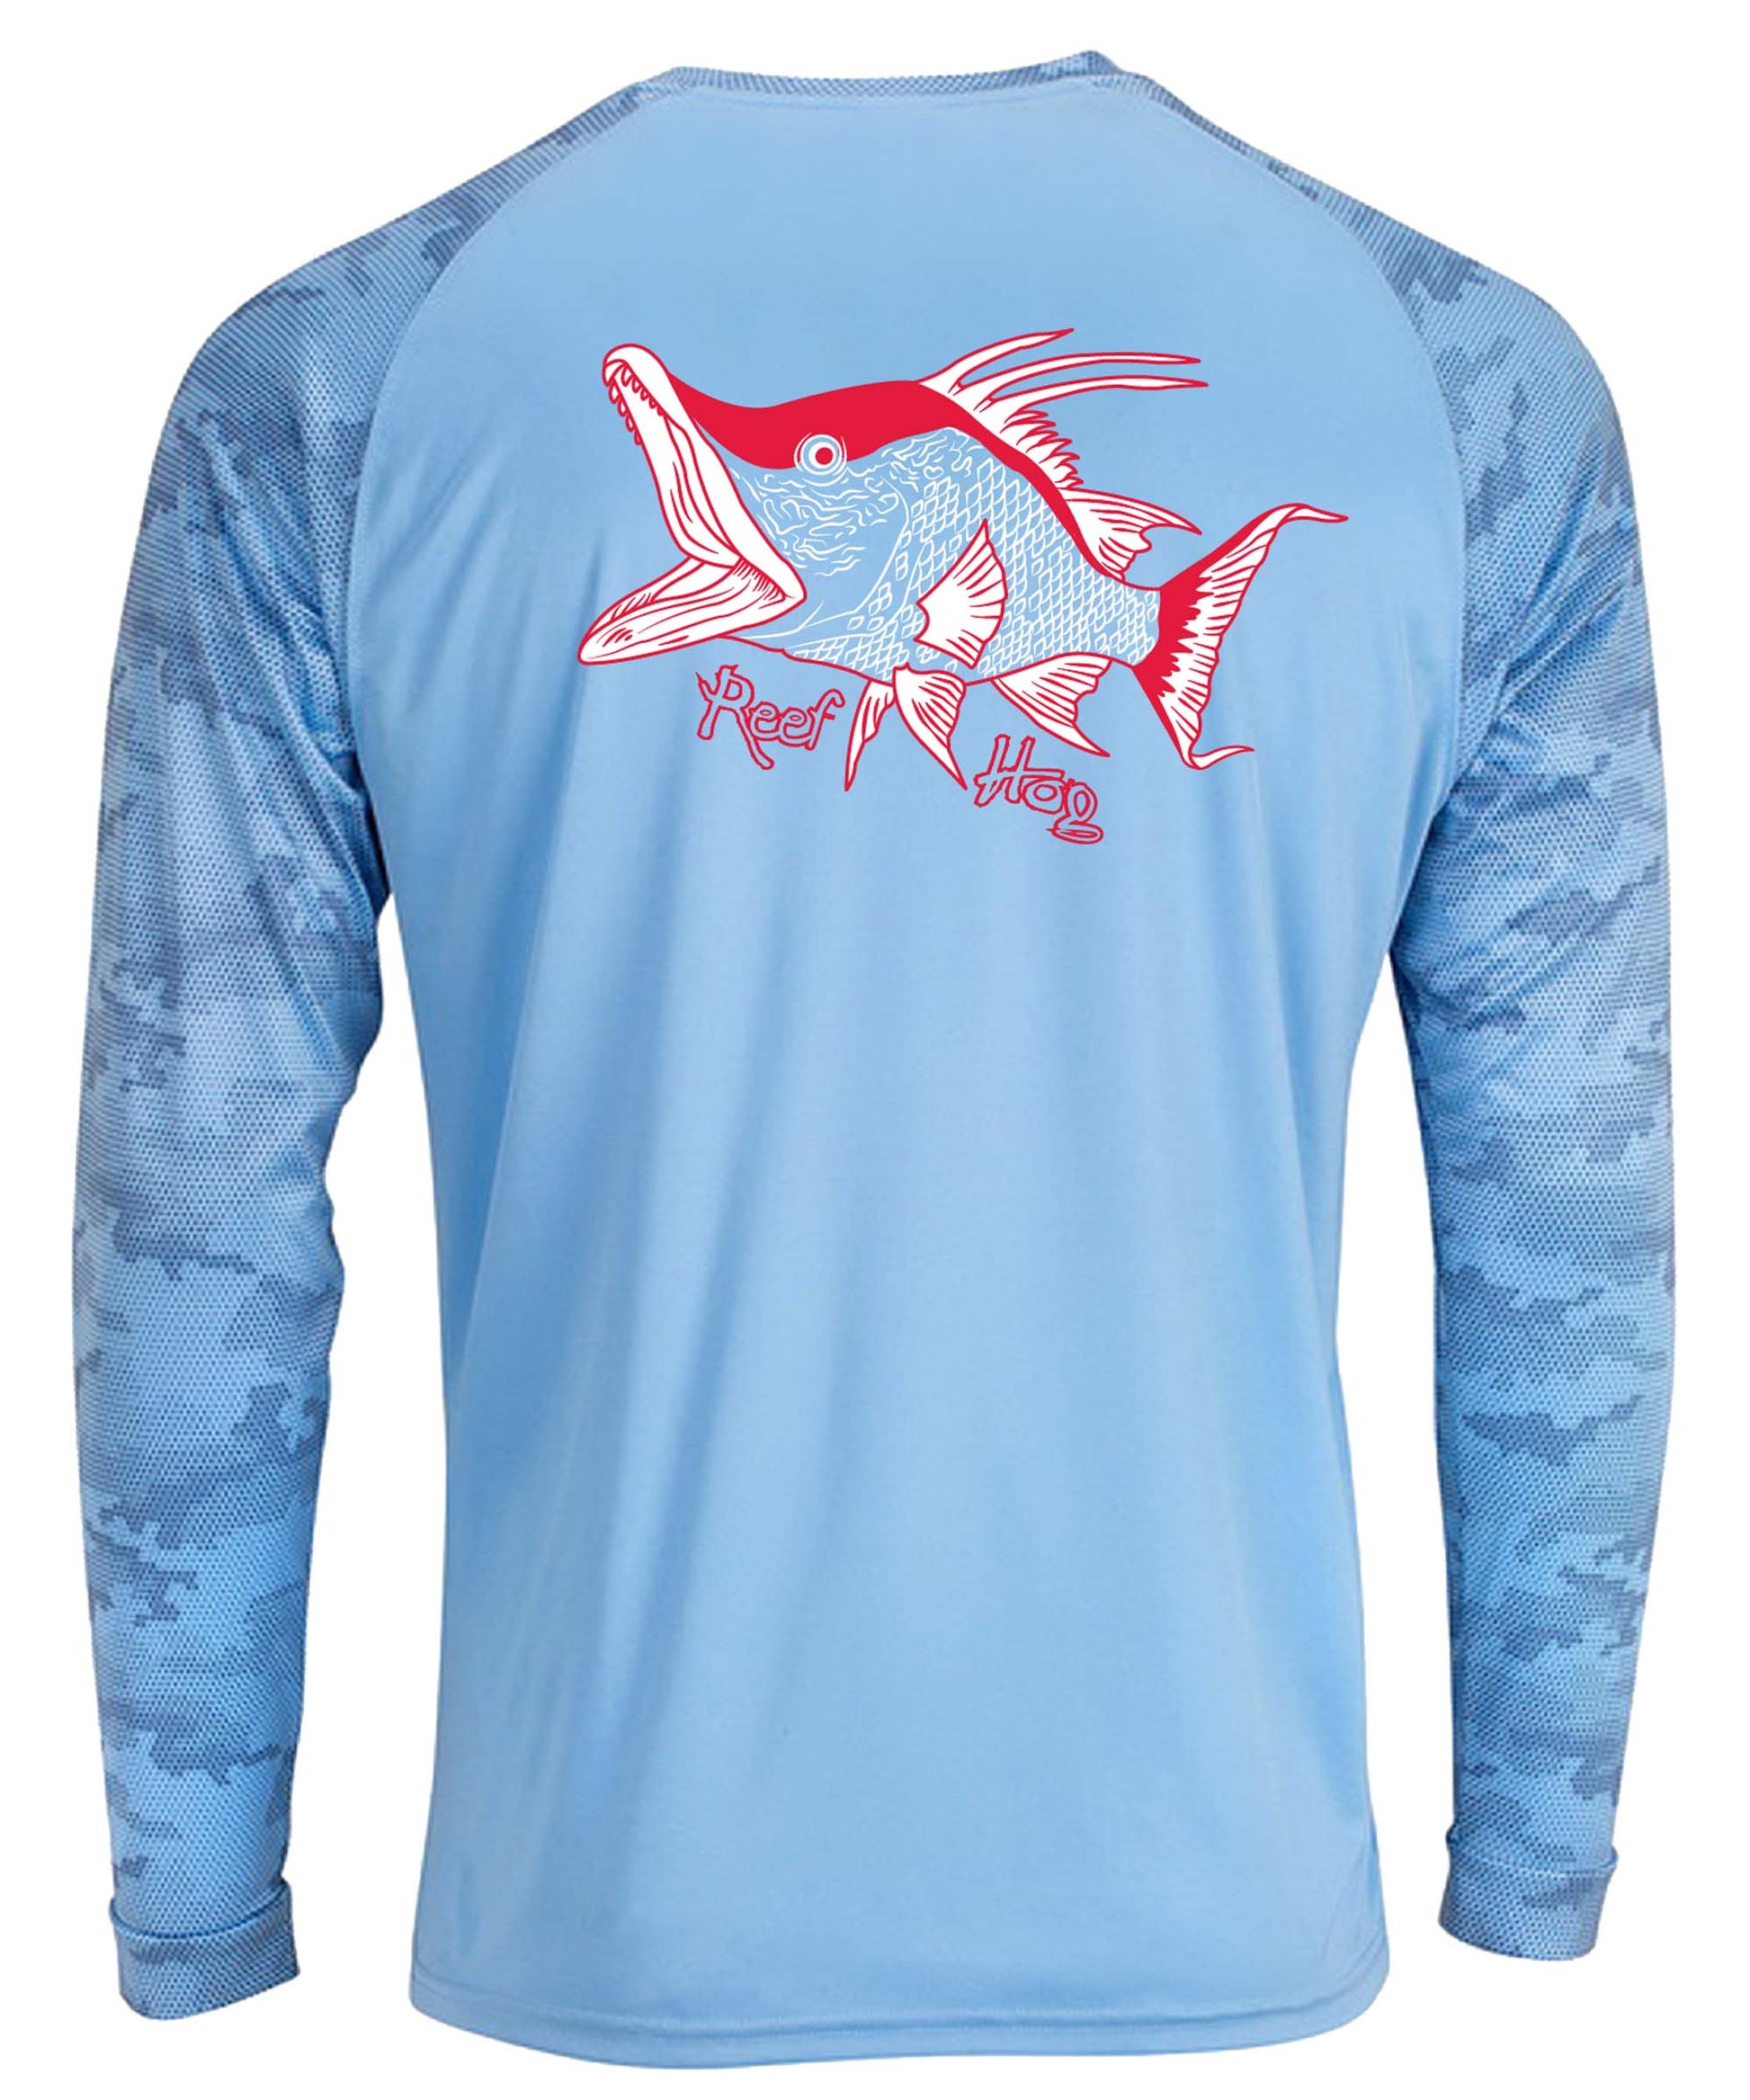 REEF & REEL Fishing Shirts Long Sleeve Uv Protection T Shirt for